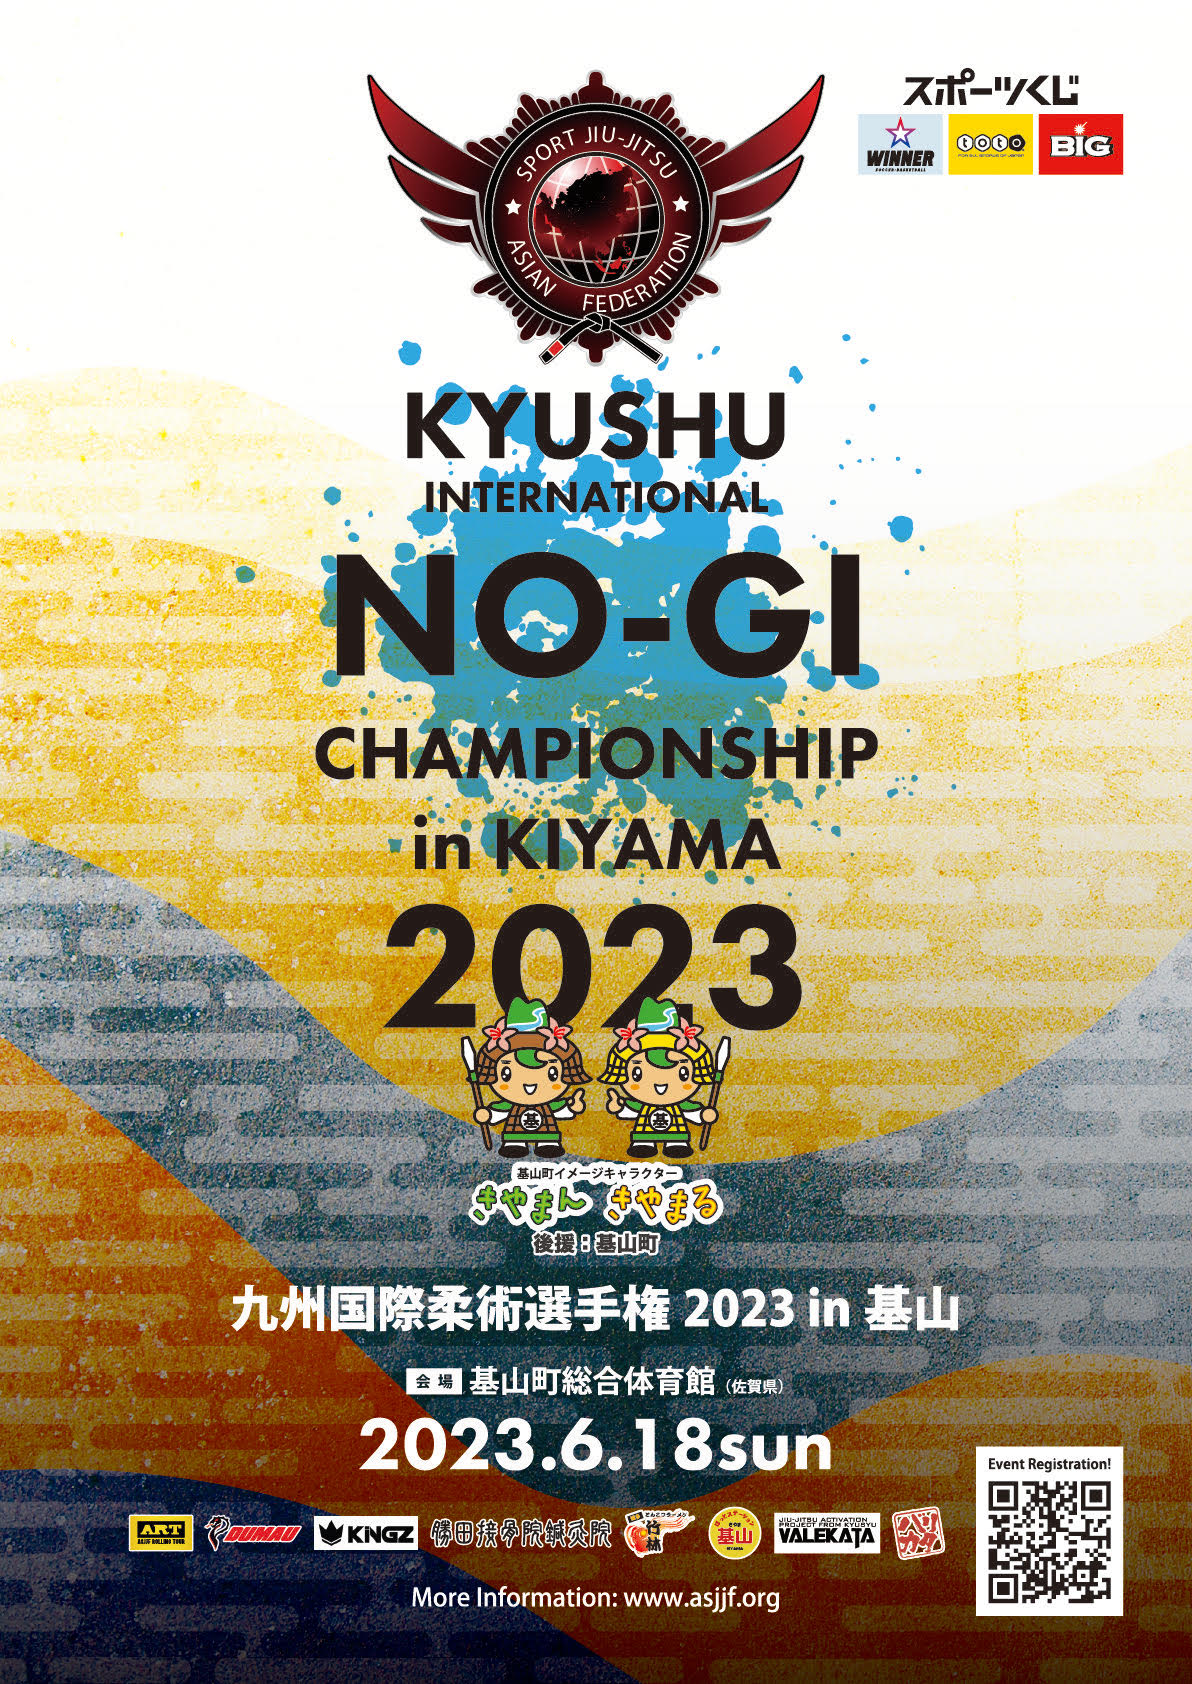 Kyushu International No-gi Championship 2023